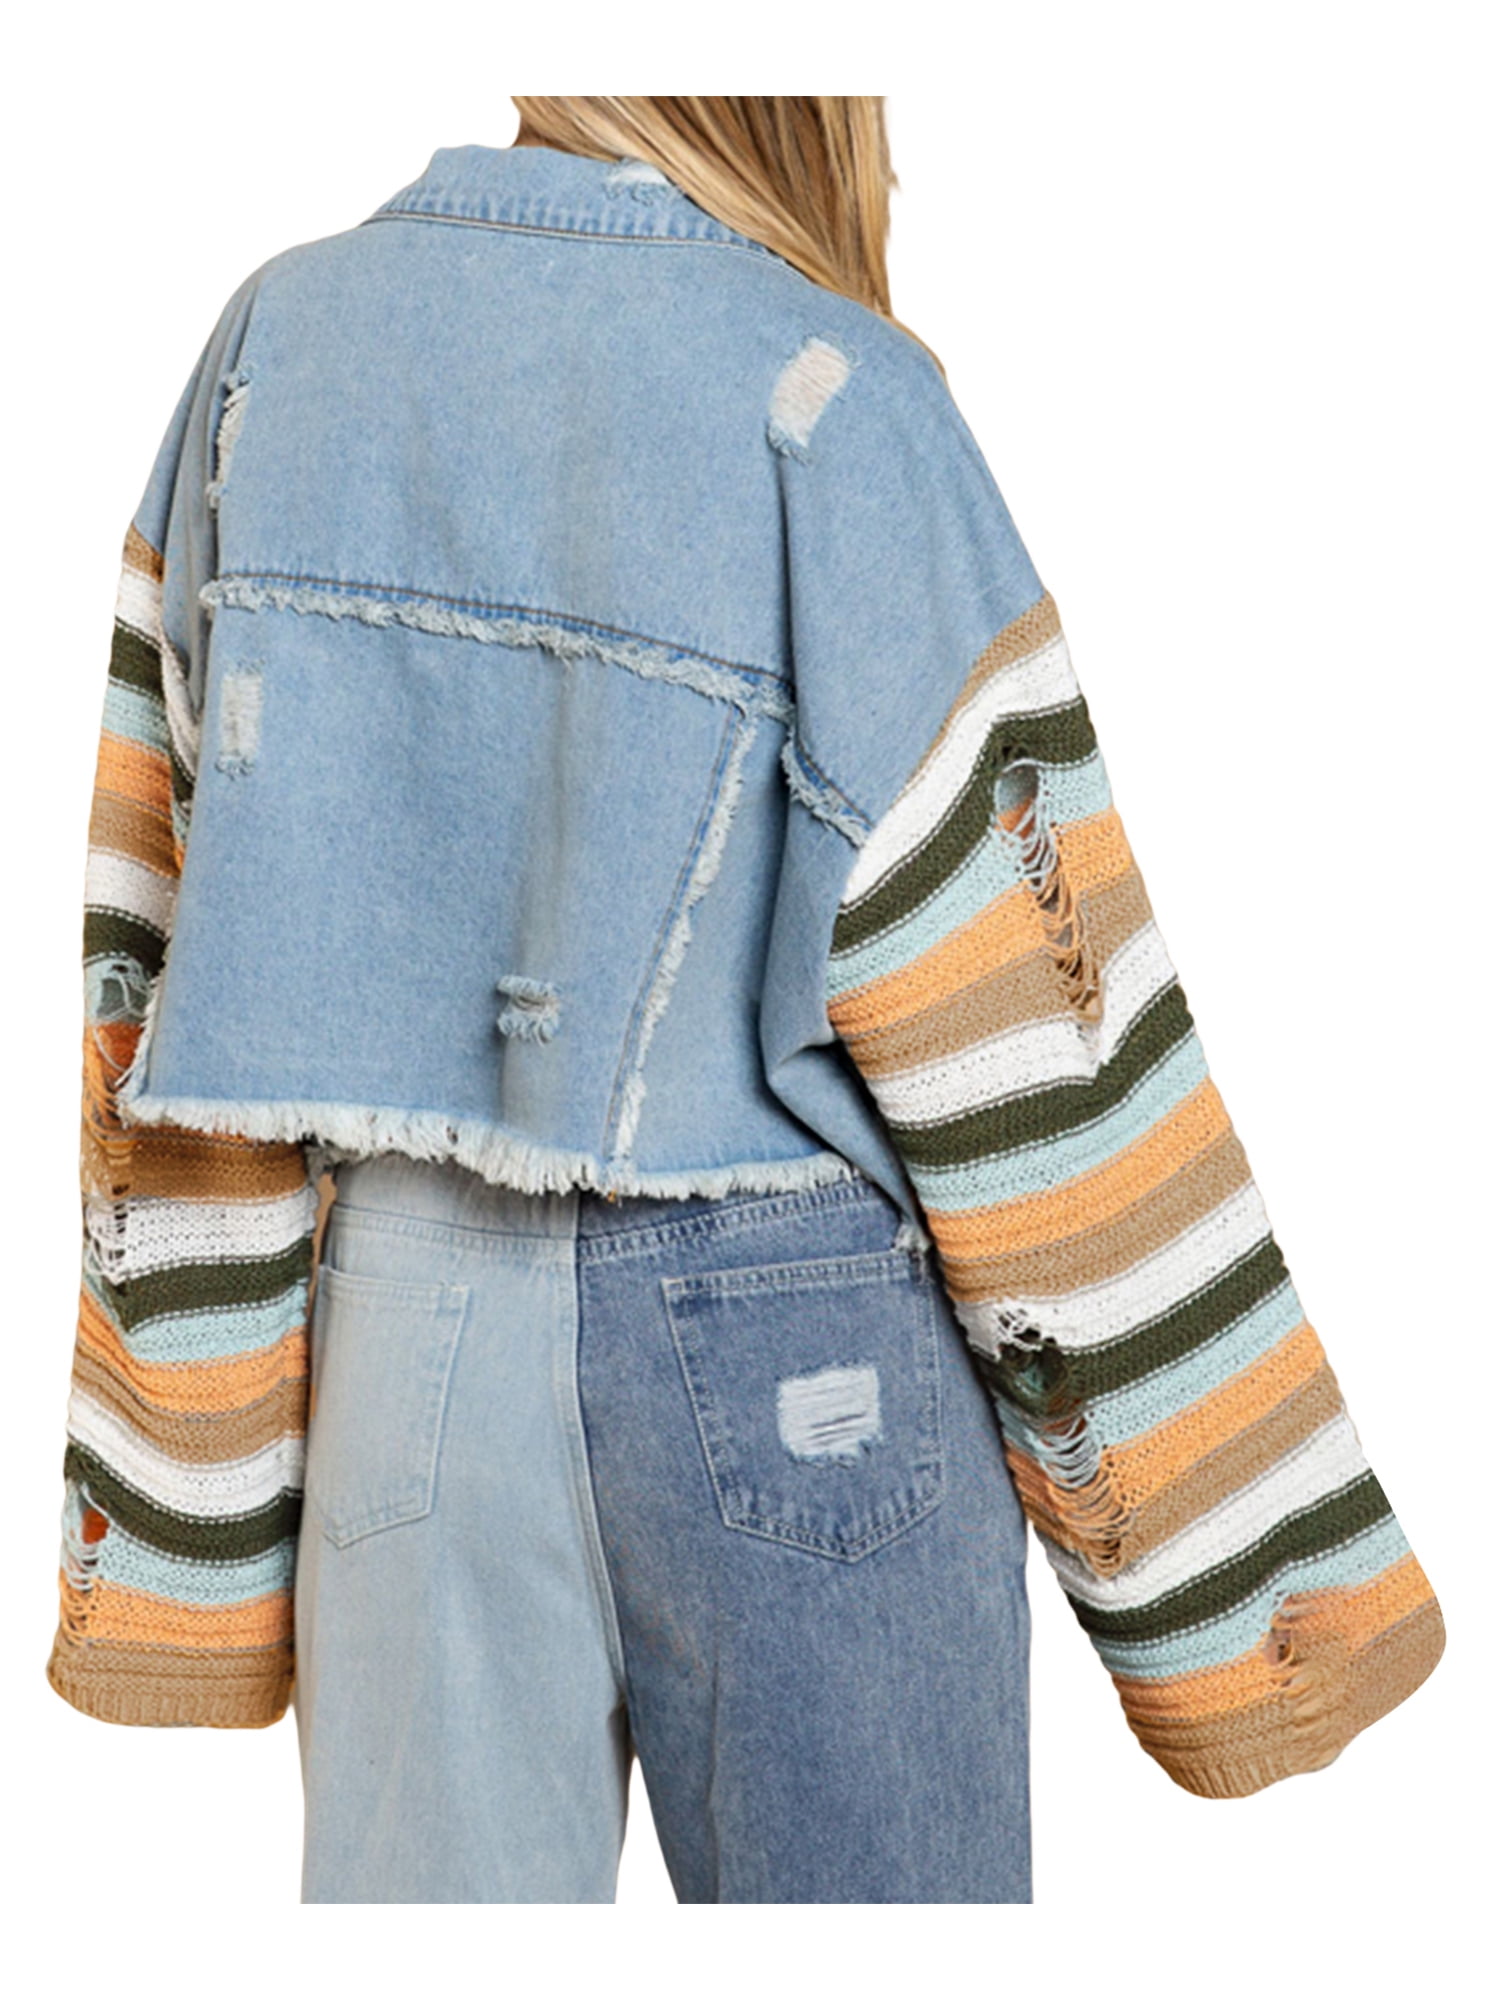 DenimJacketPoupee Custom Jean Jacket, Patchwork Denim Jacket, Quilted Jacket Handmade, Denim Jacket for Women, 80s Clothing